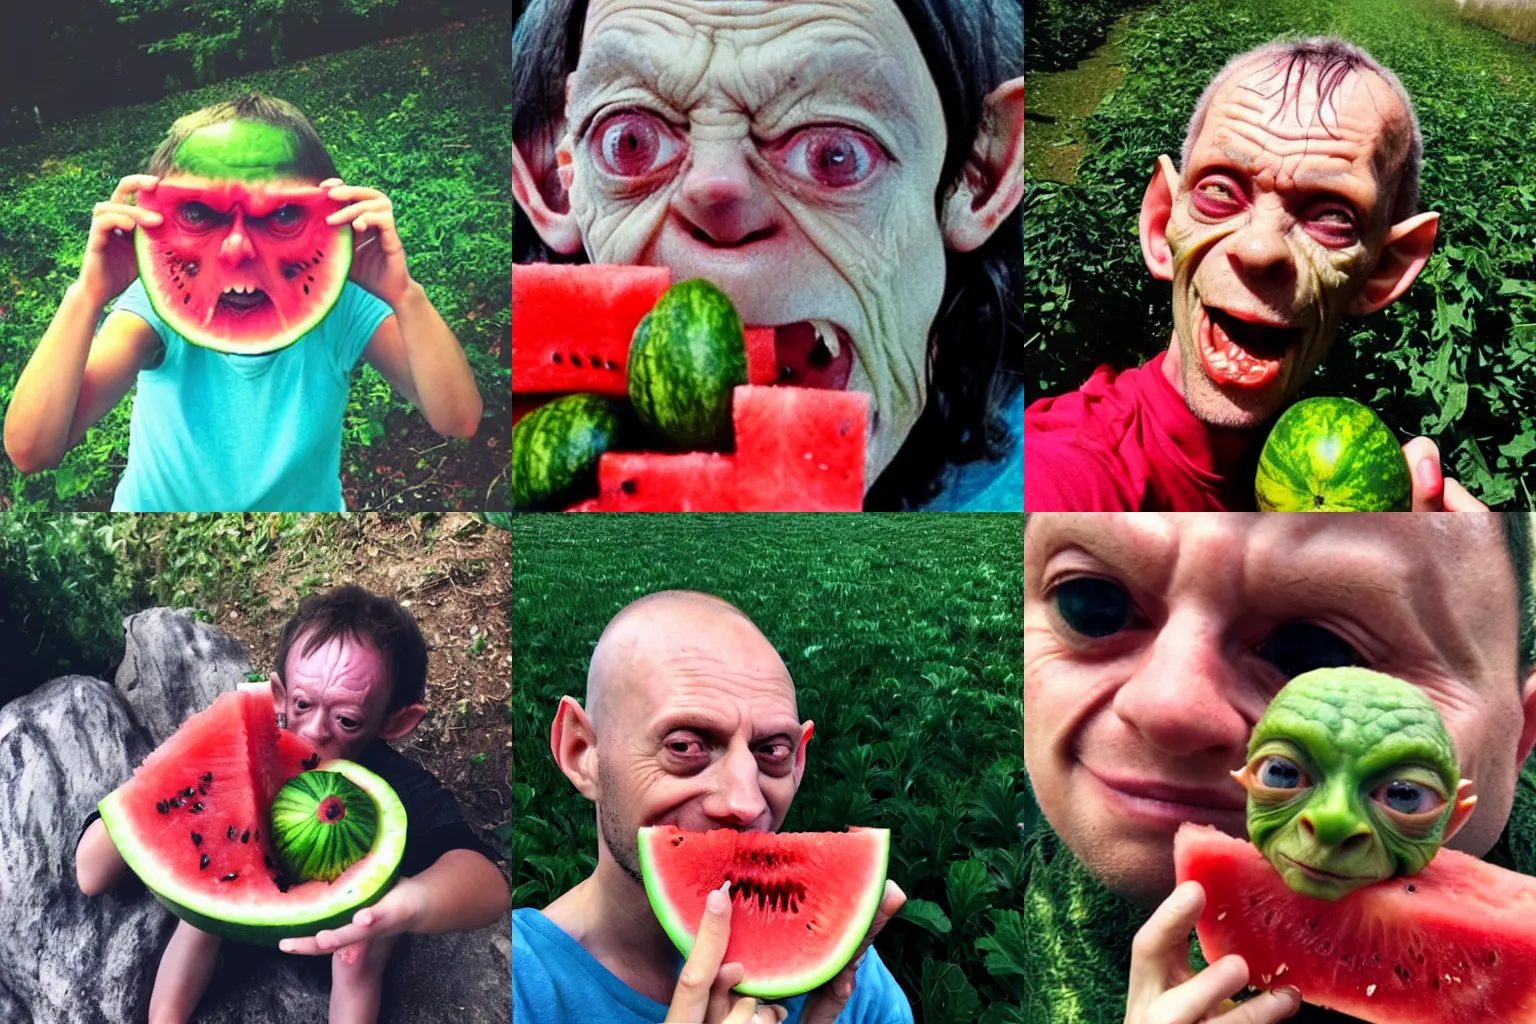 Prompt: Gollum eating watermelon selfie